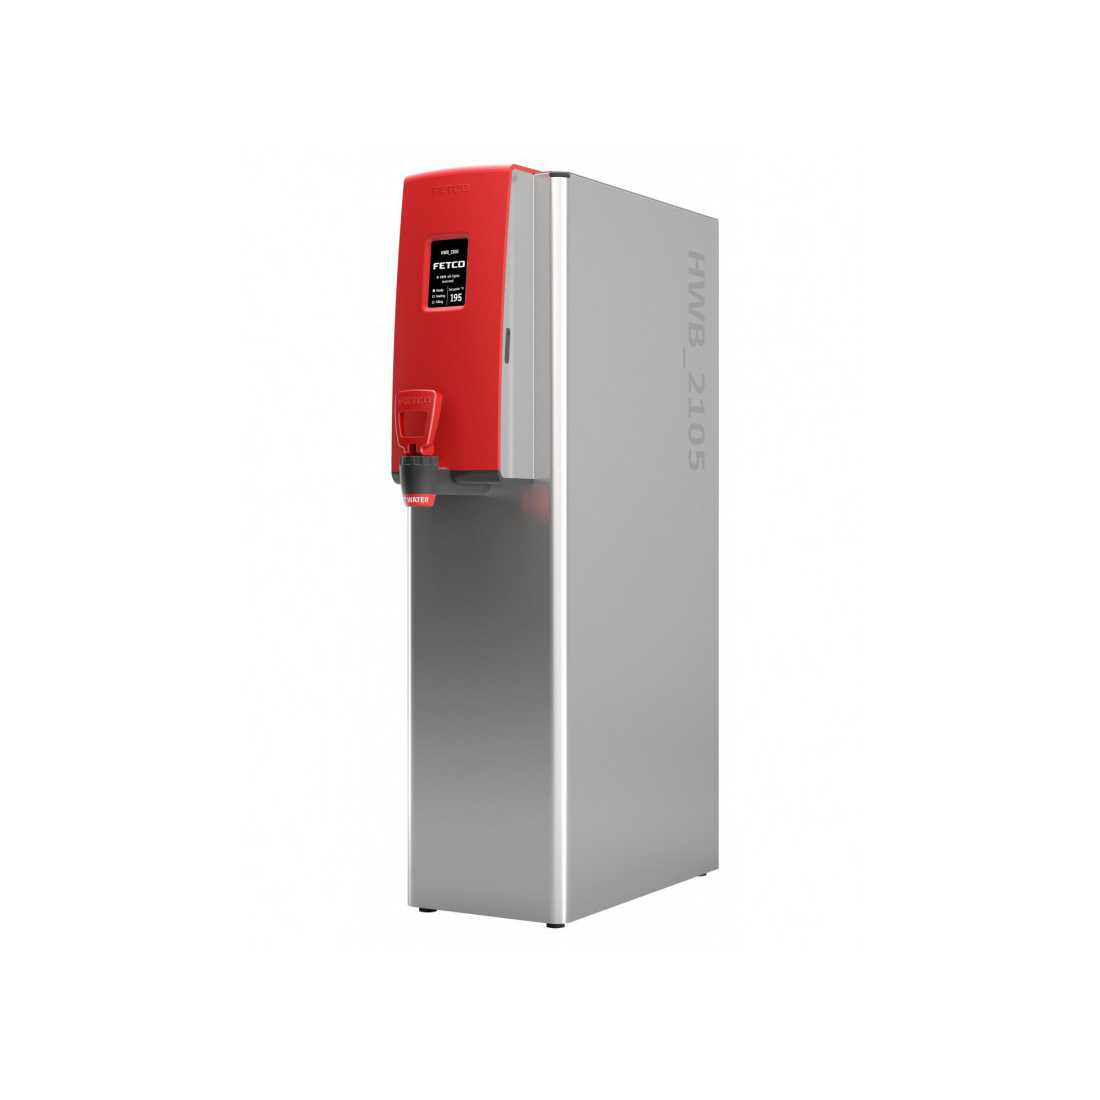 FETCO (HWB-2105) Hot Water Dispenser|mkayn|مكاين